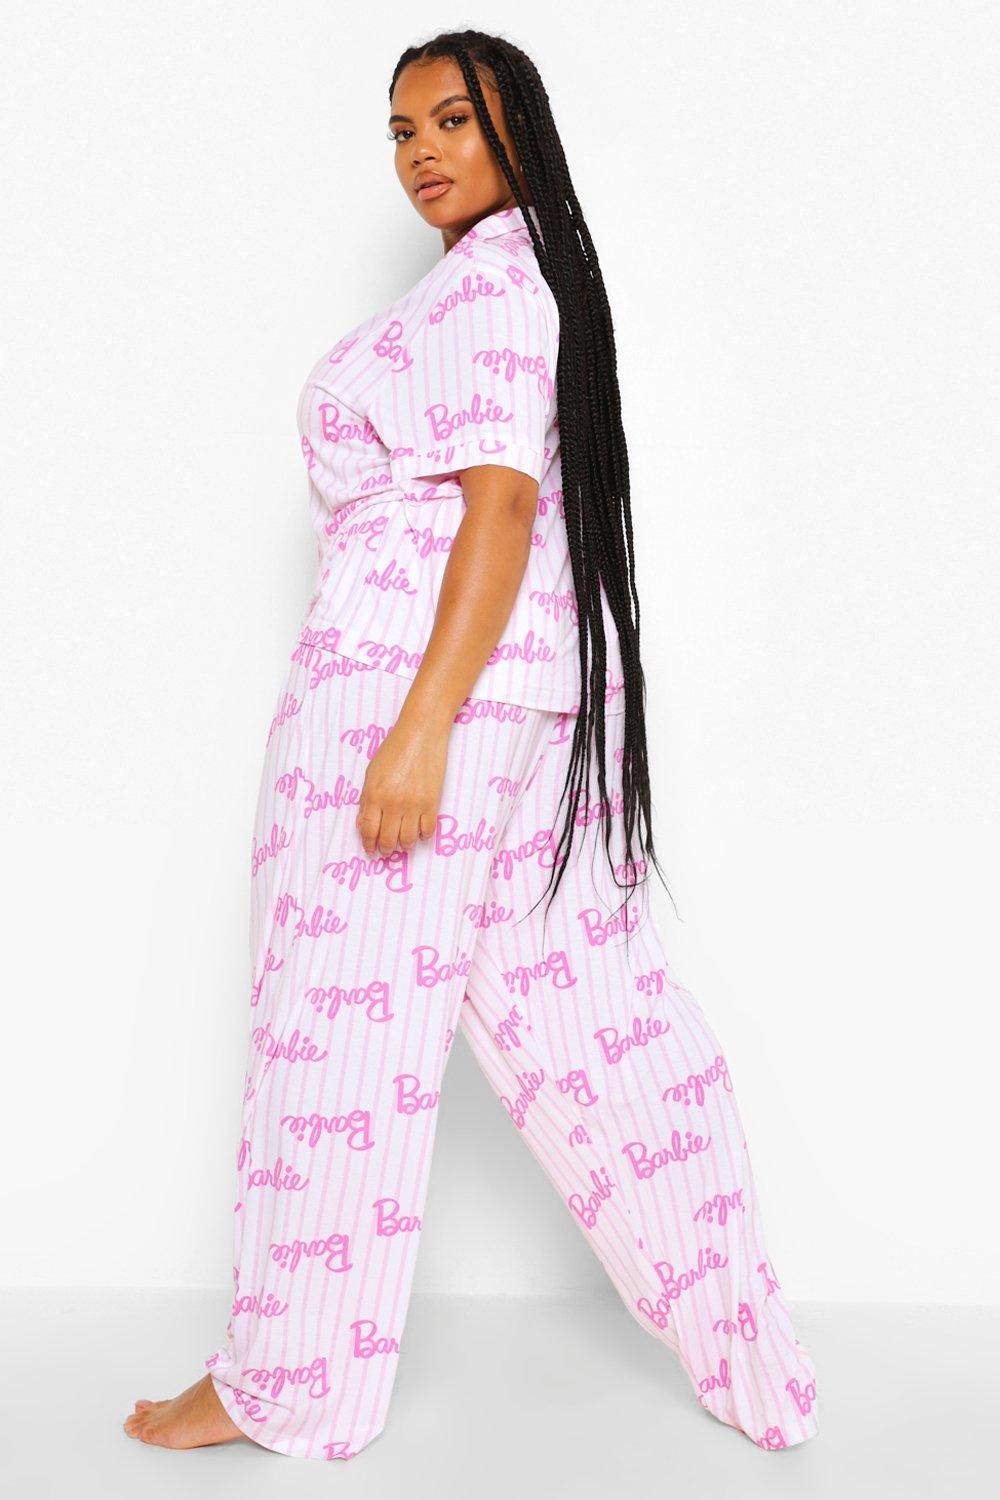 Plus Size Barbie® Pajama Short Sleeve Tee and Pajama Jogger Set